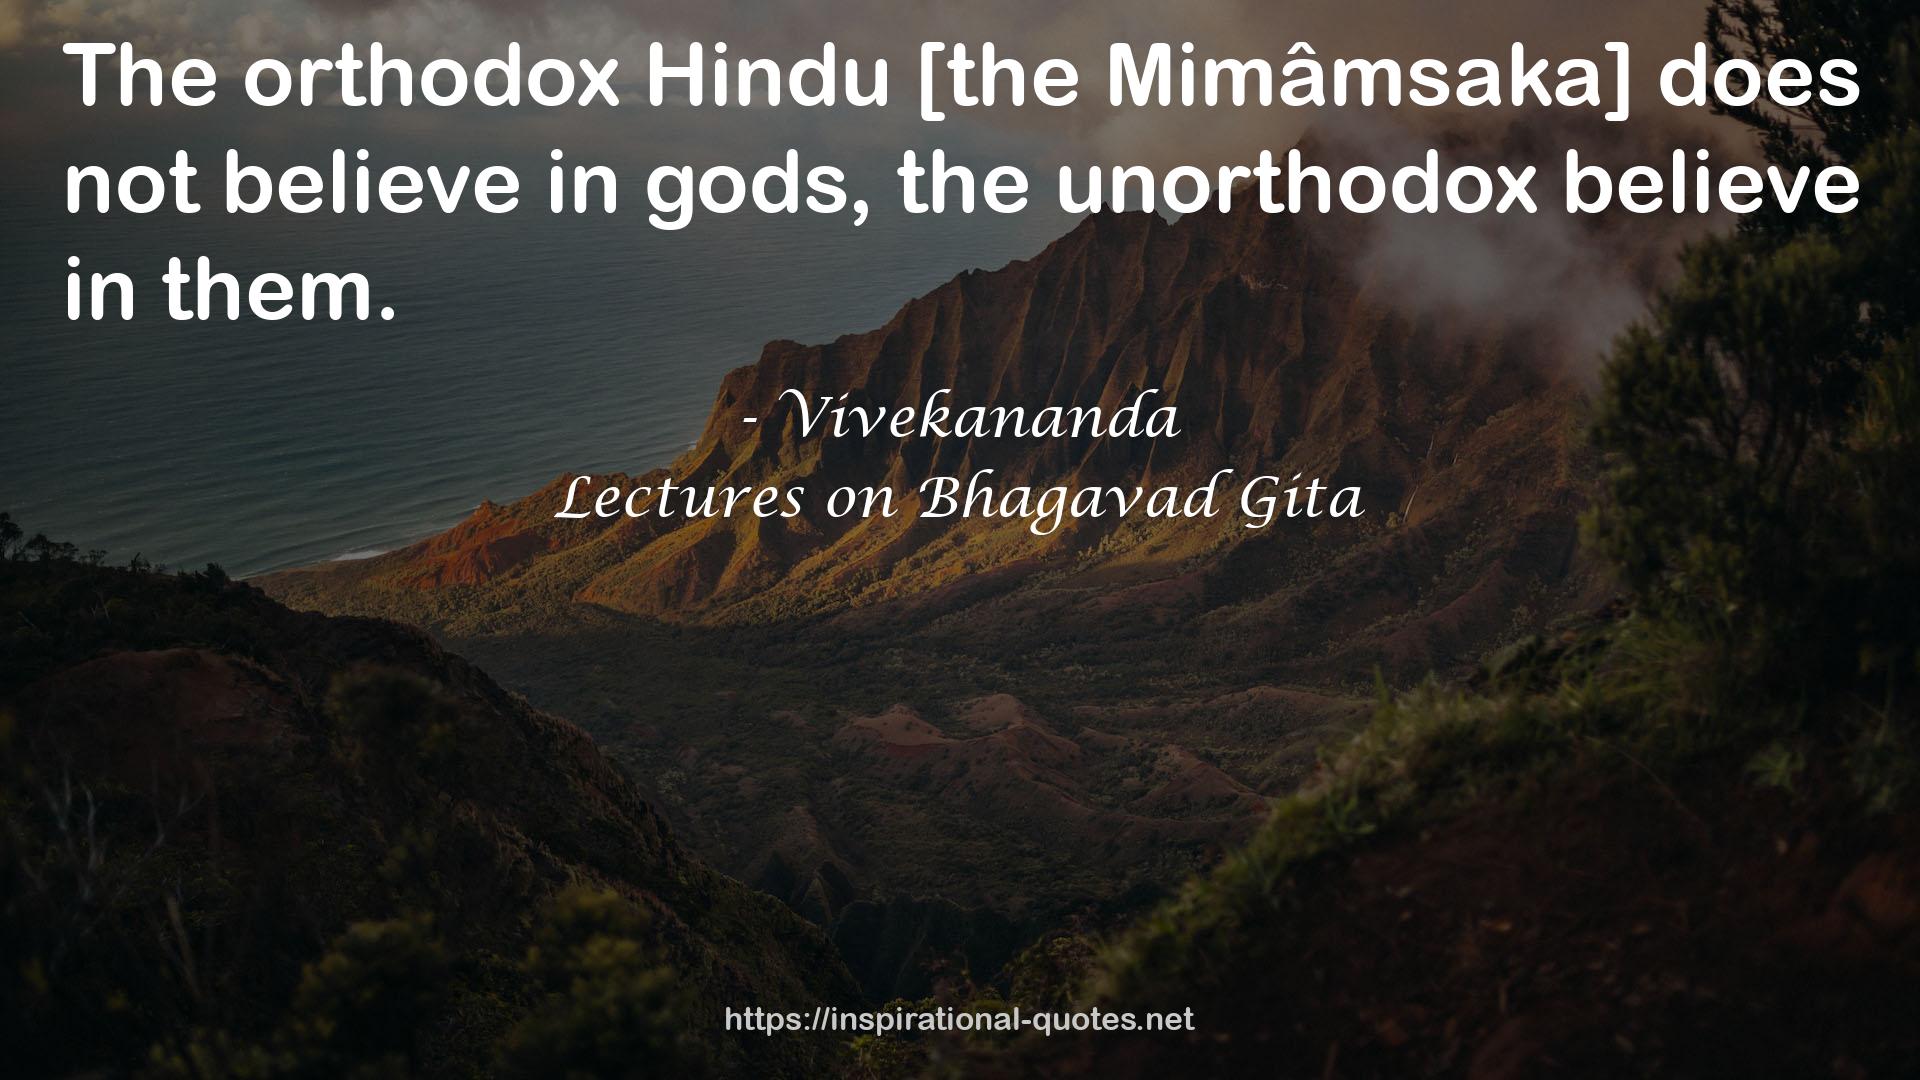 Lectures on Bhagavad Gita QUOTES